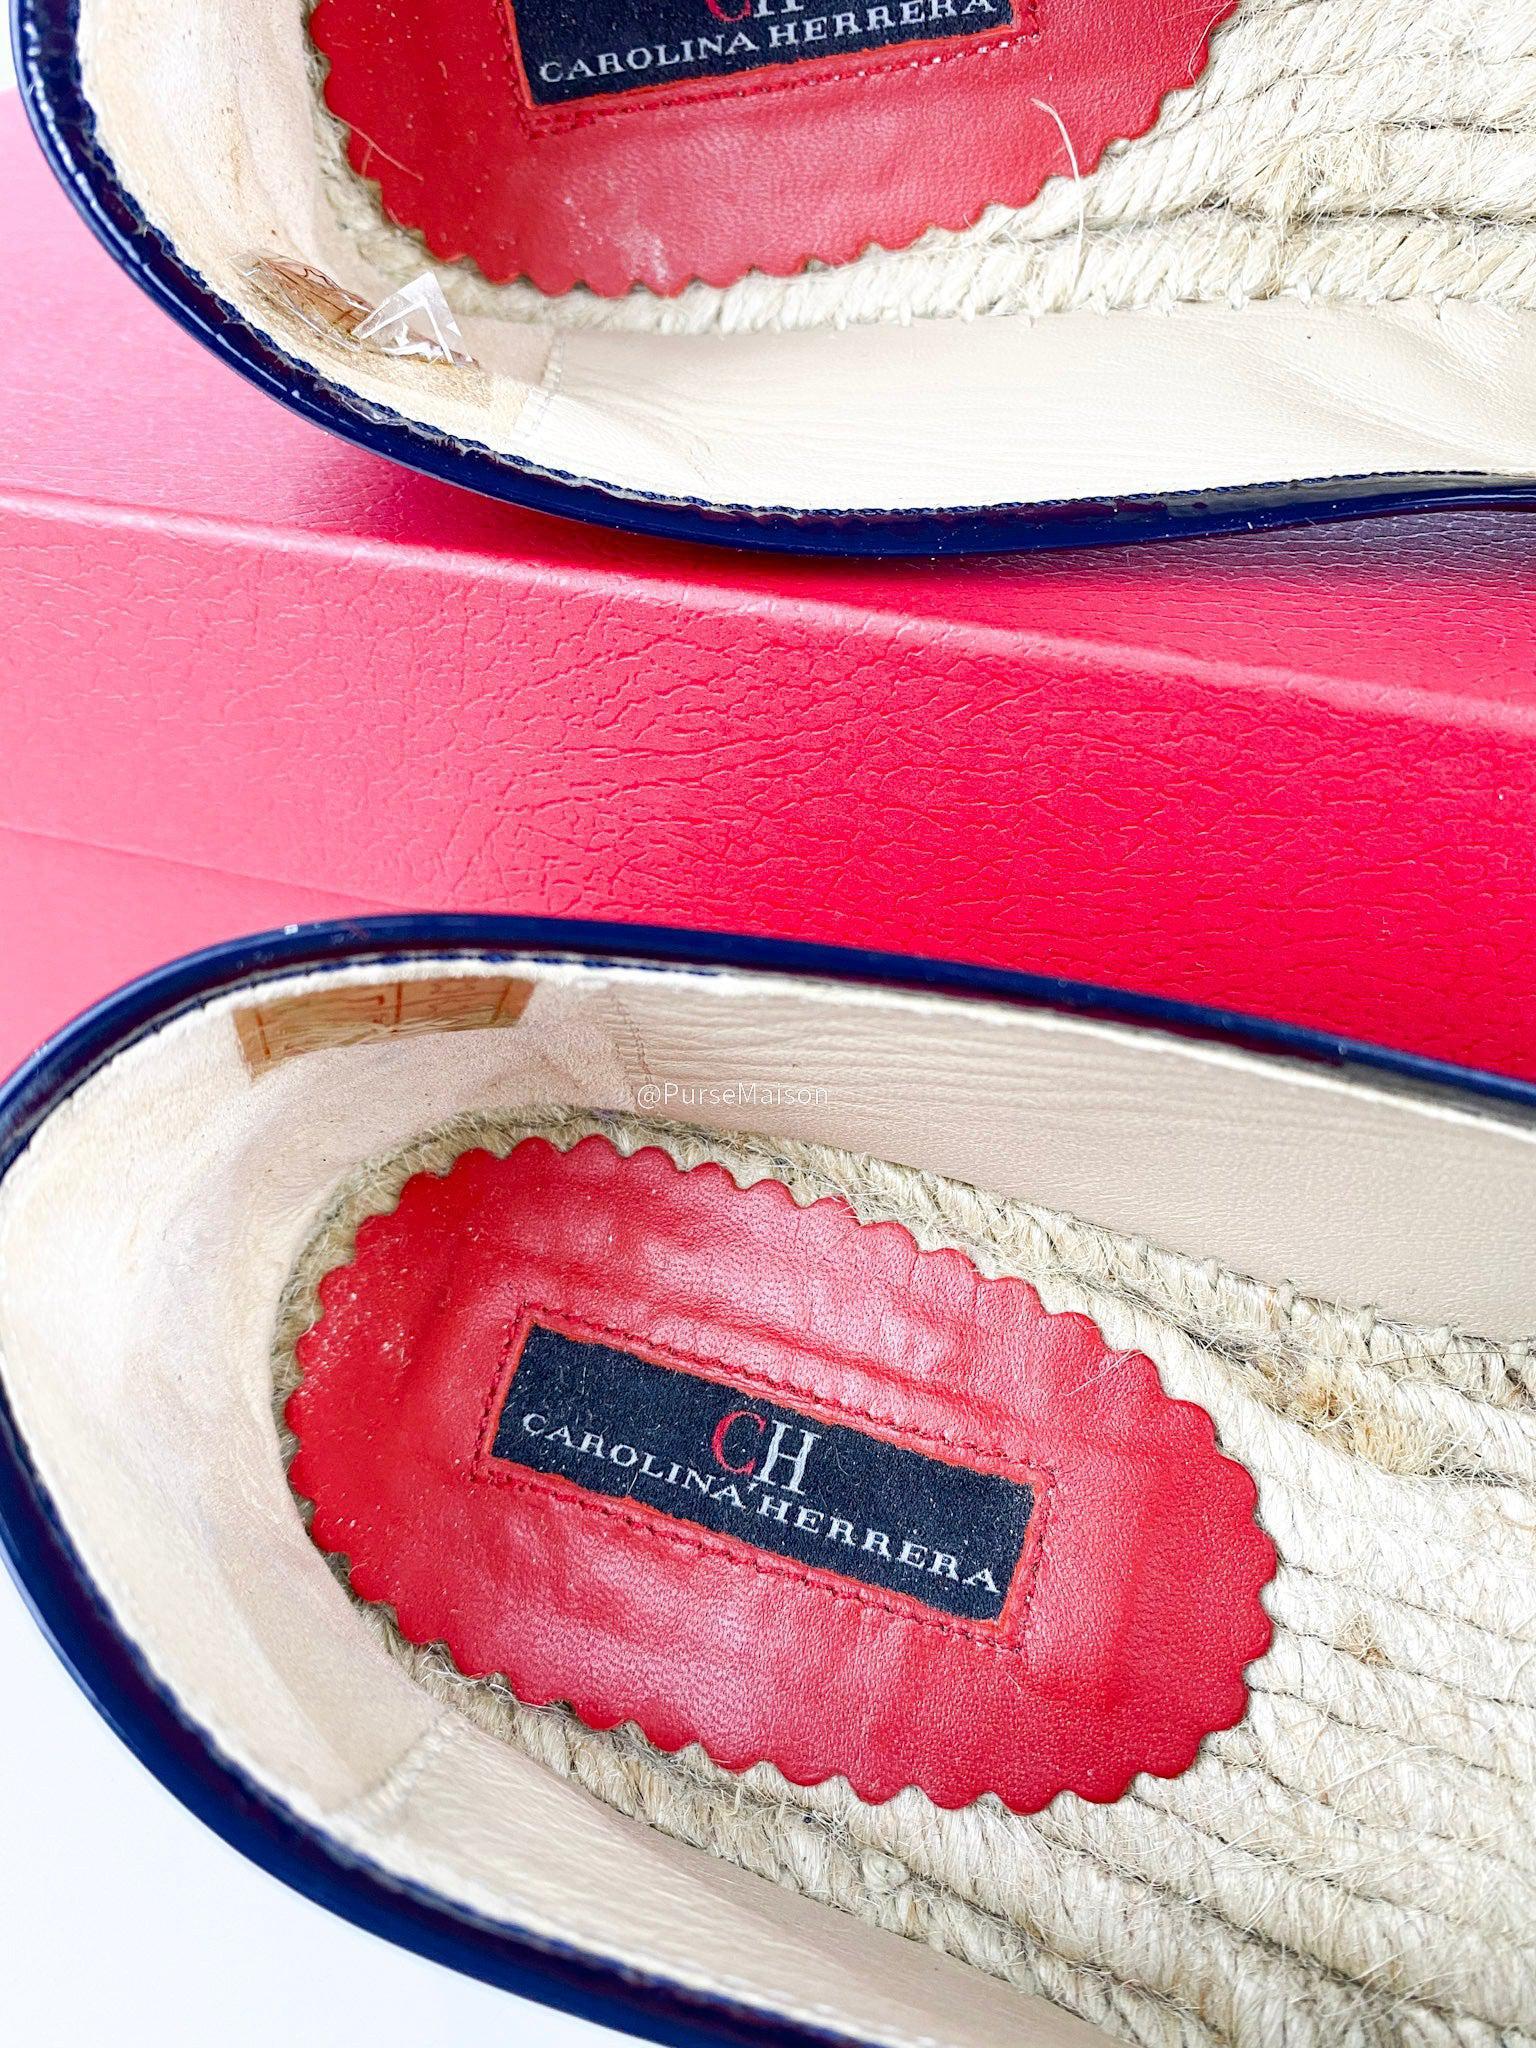 Carolina Herrera Espadrilles (Black/Red) Shoes (Size 39 EUR)